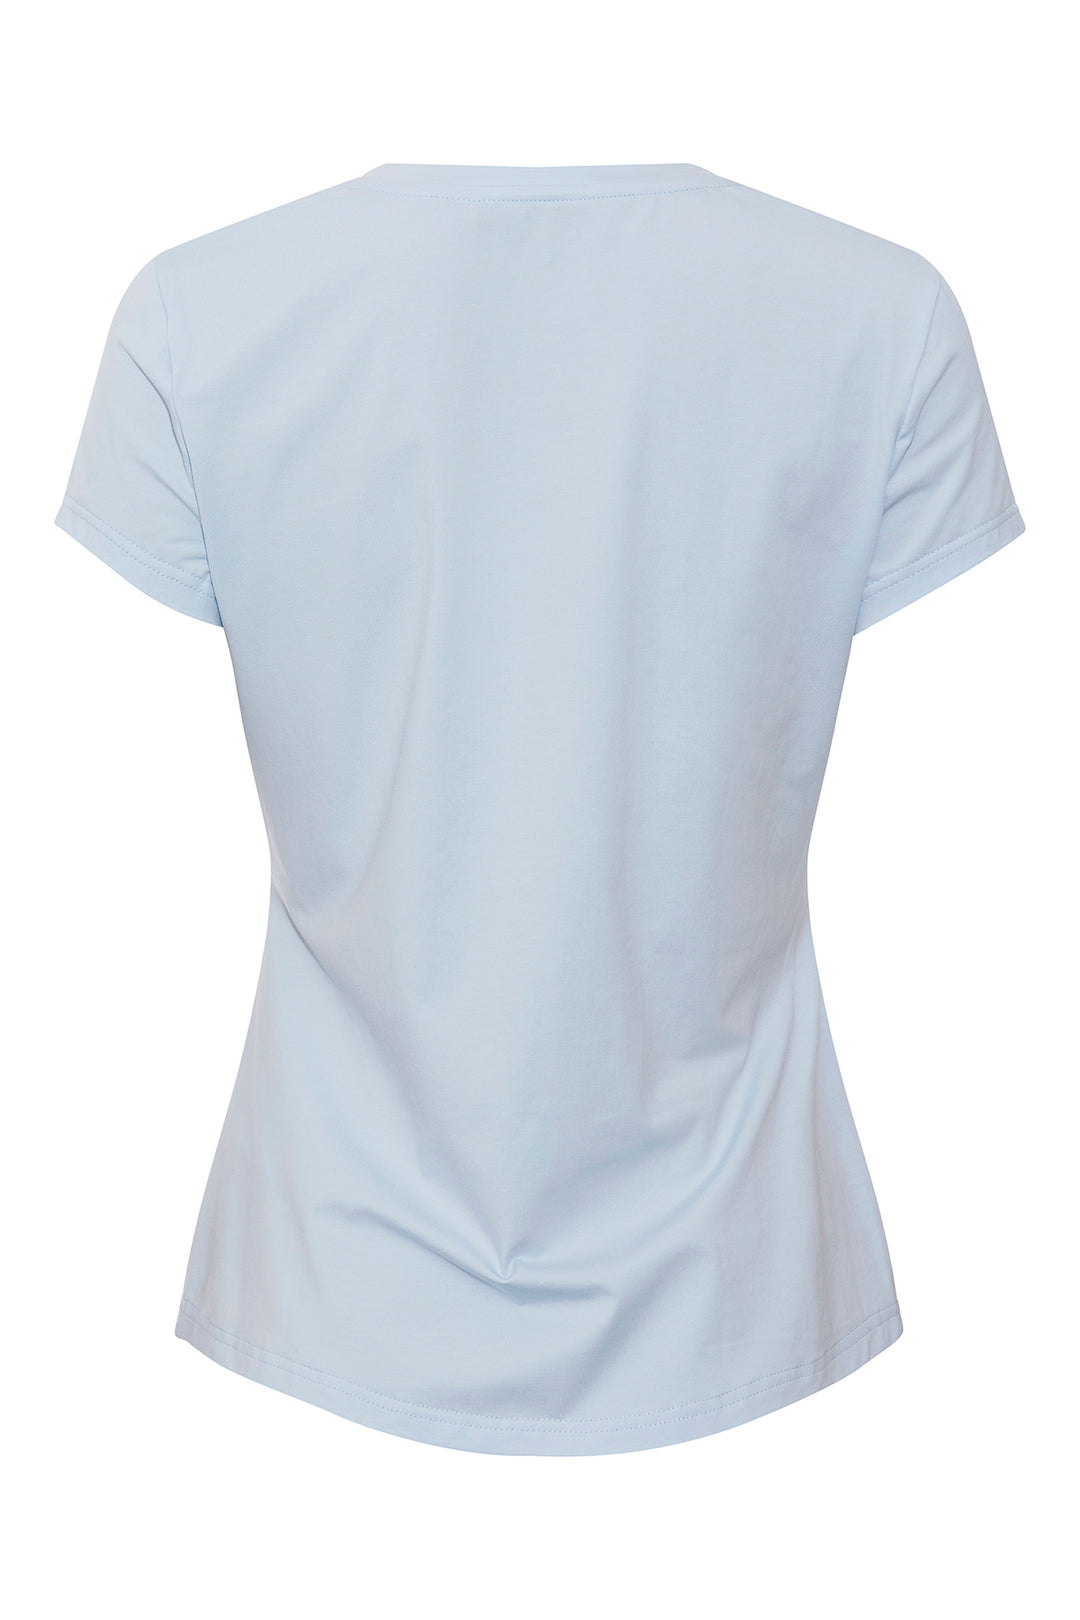 PBO Philosopher T-shirt T-SHIRTS 213 Sky blue